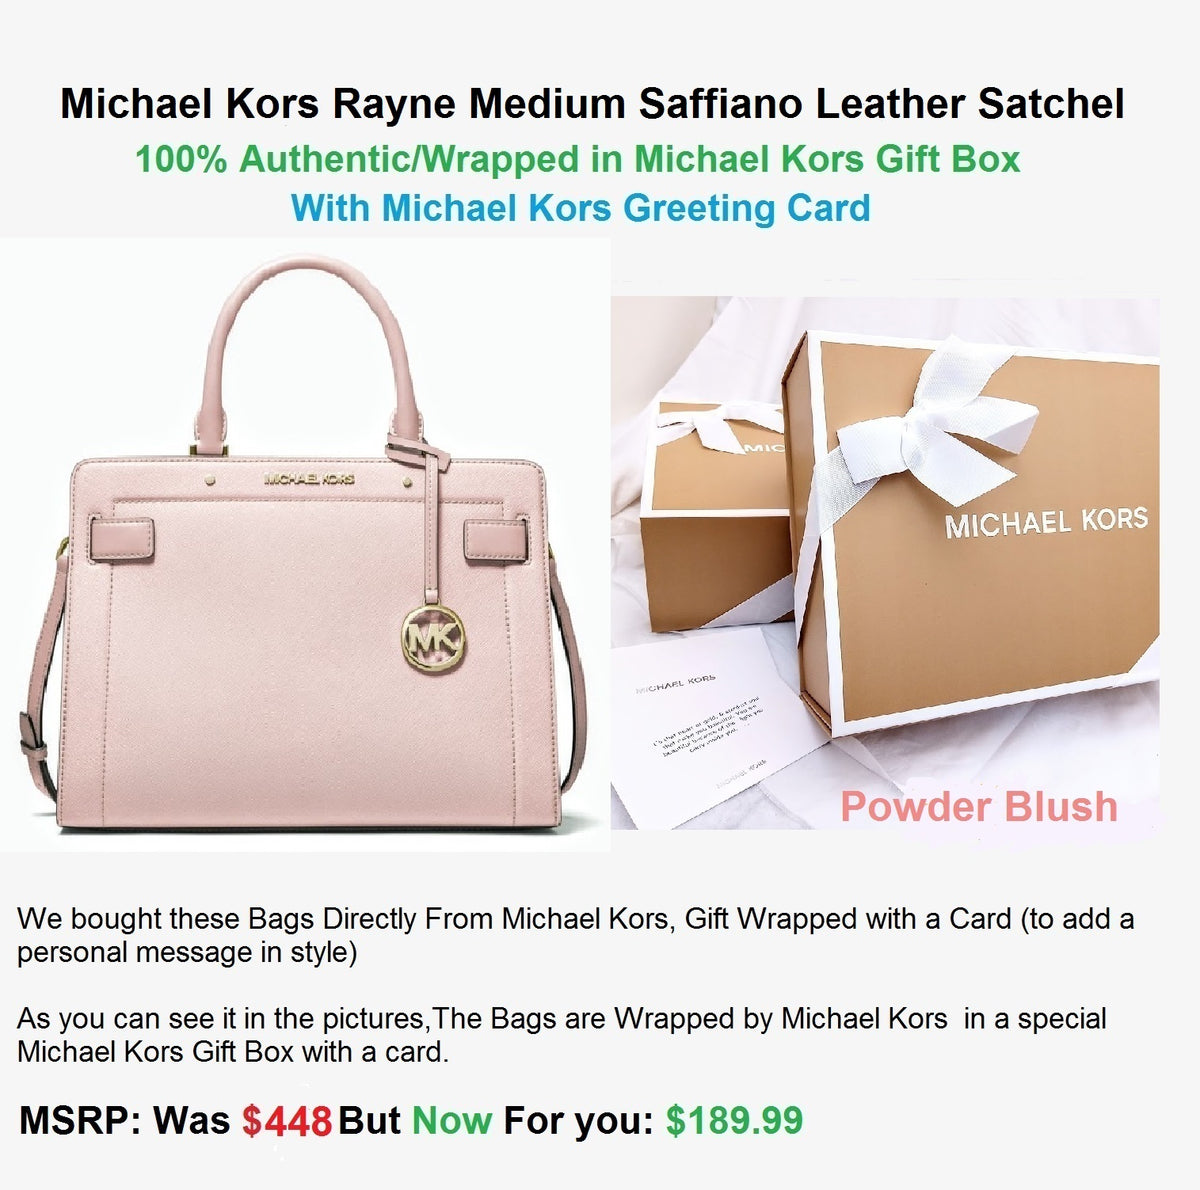 Michael kors Rayne Medium Saffiano Leather Satchel